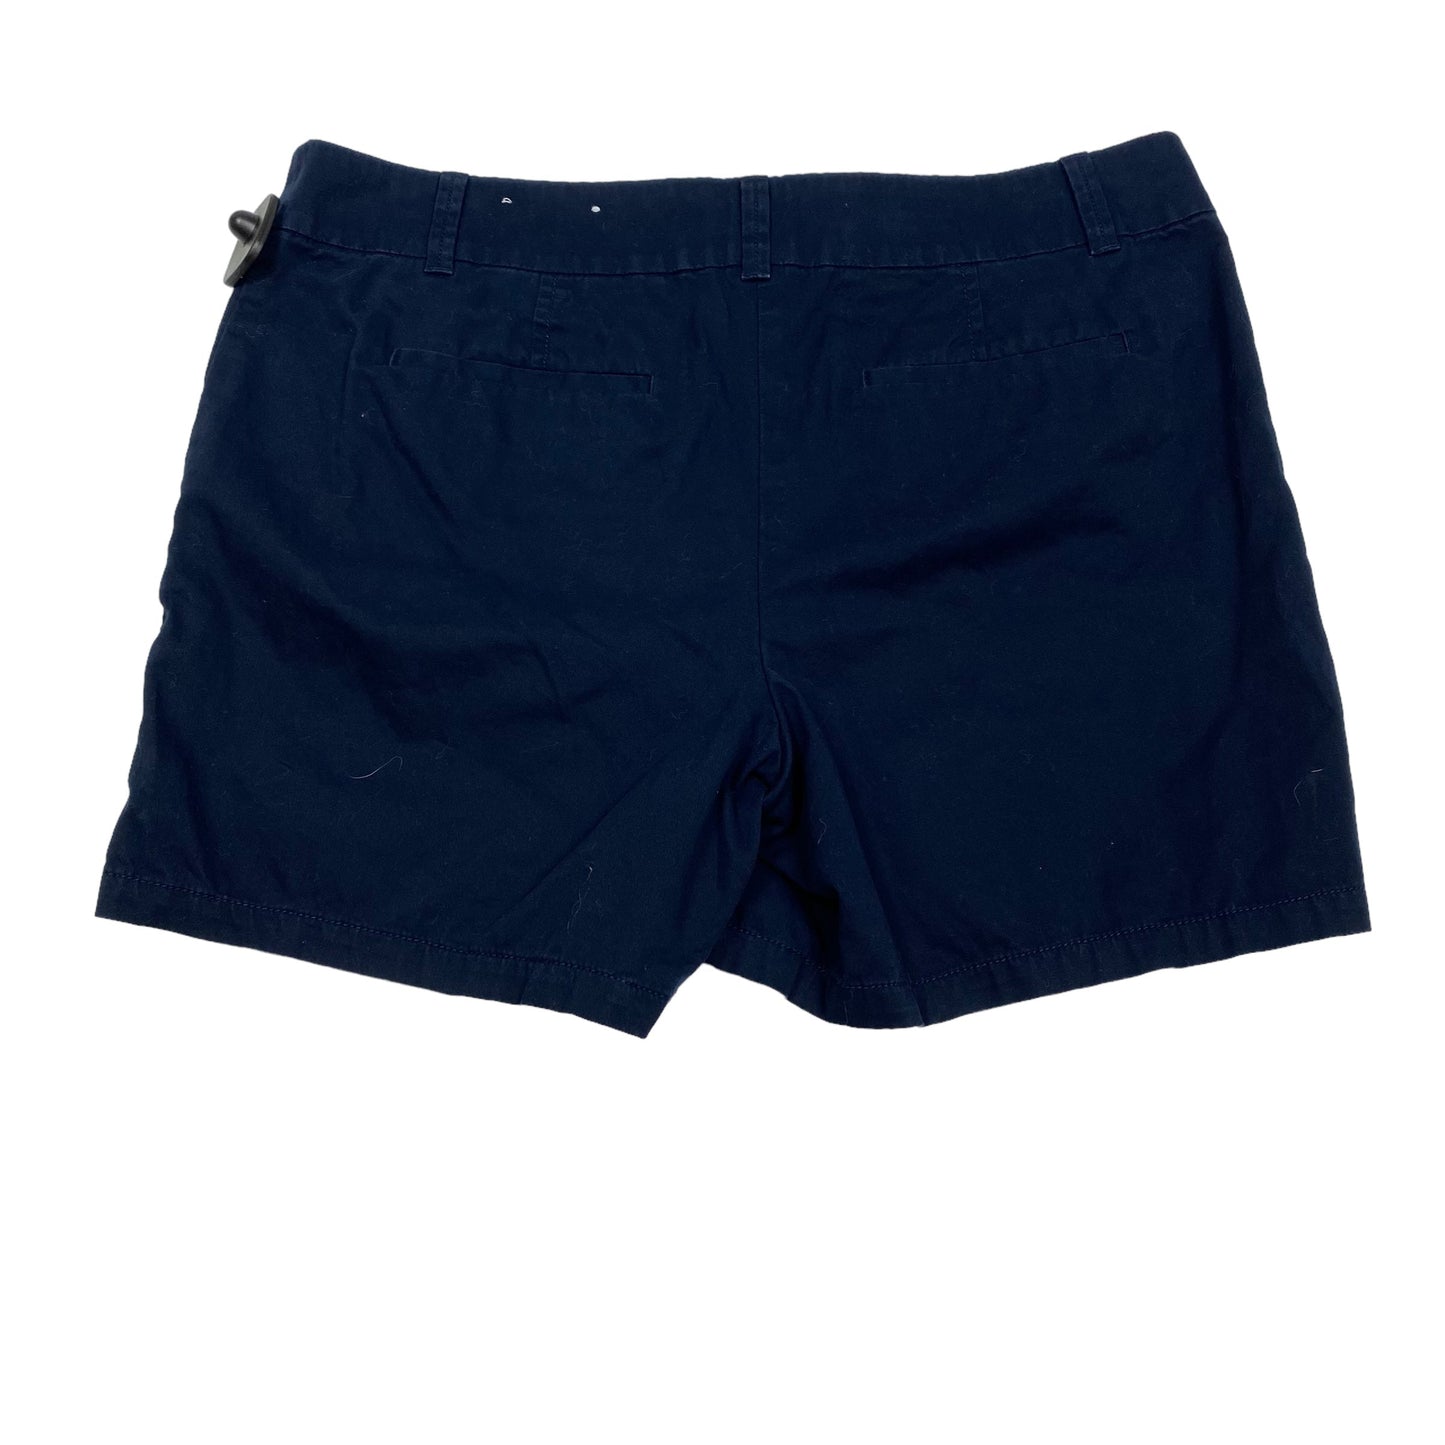 Navy Shorts Loft, Size 14